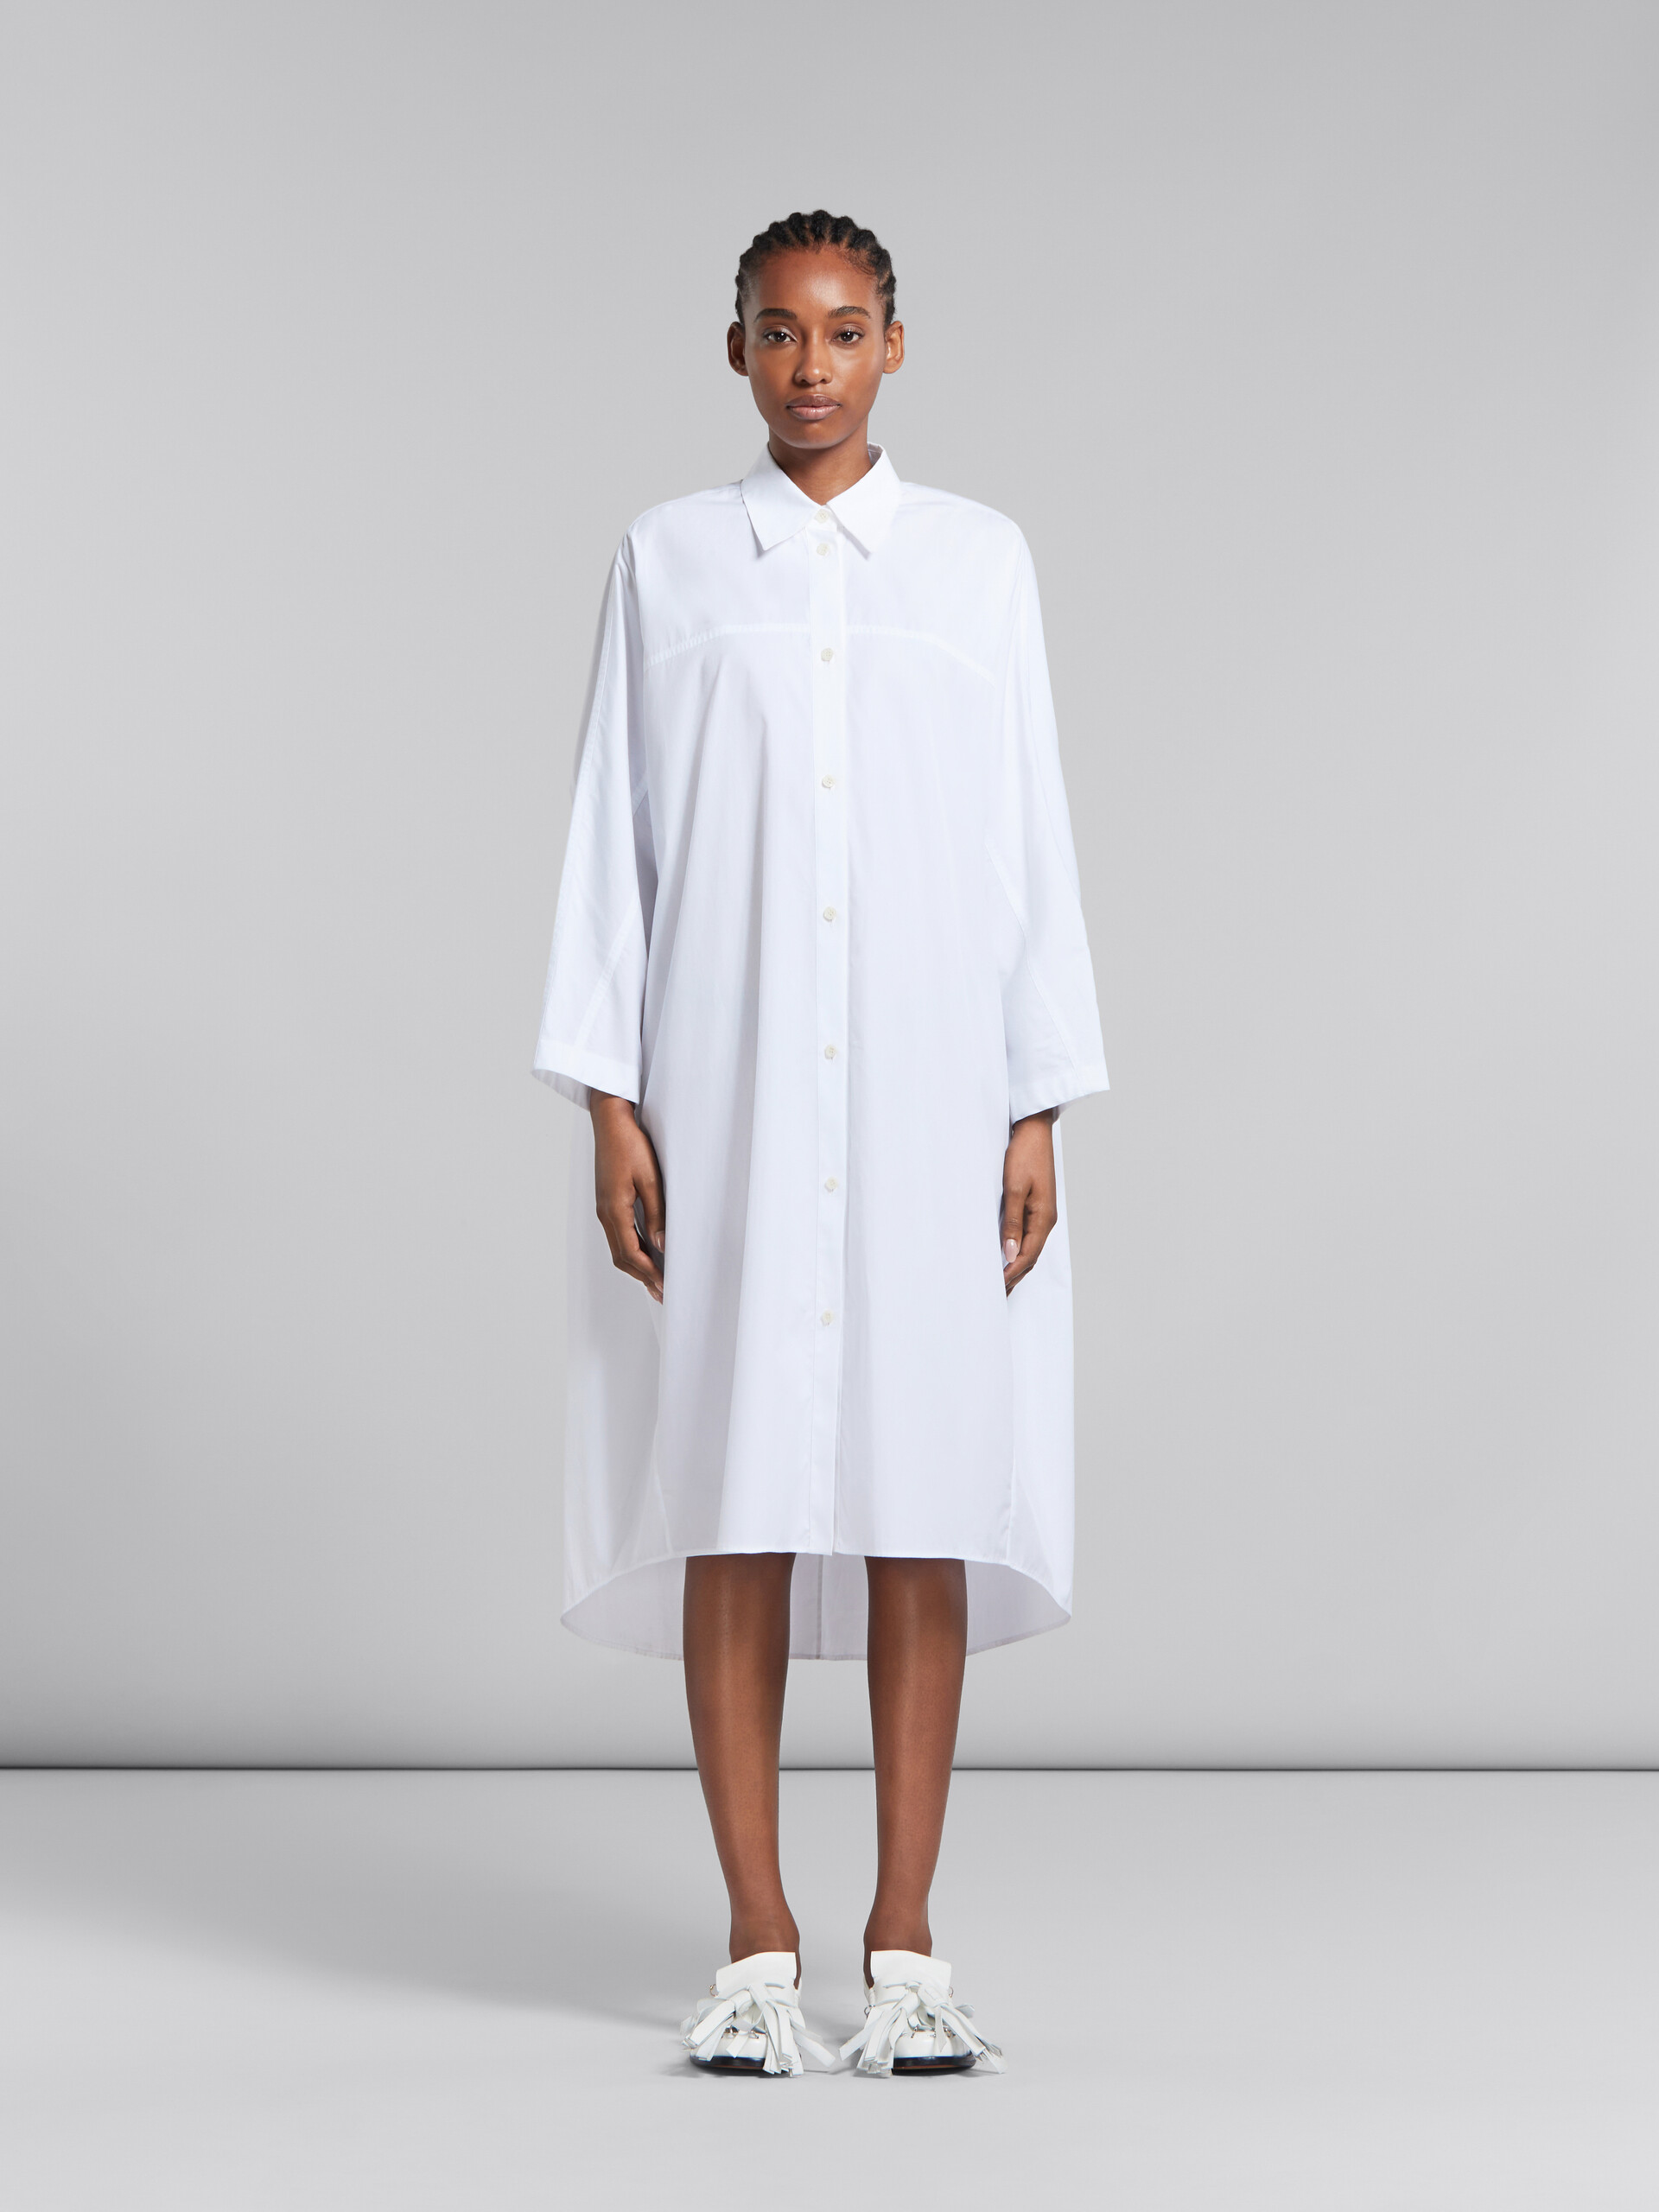 Vestido camisero oversize blanco de popelina ecológica - Vestidos - Image 2